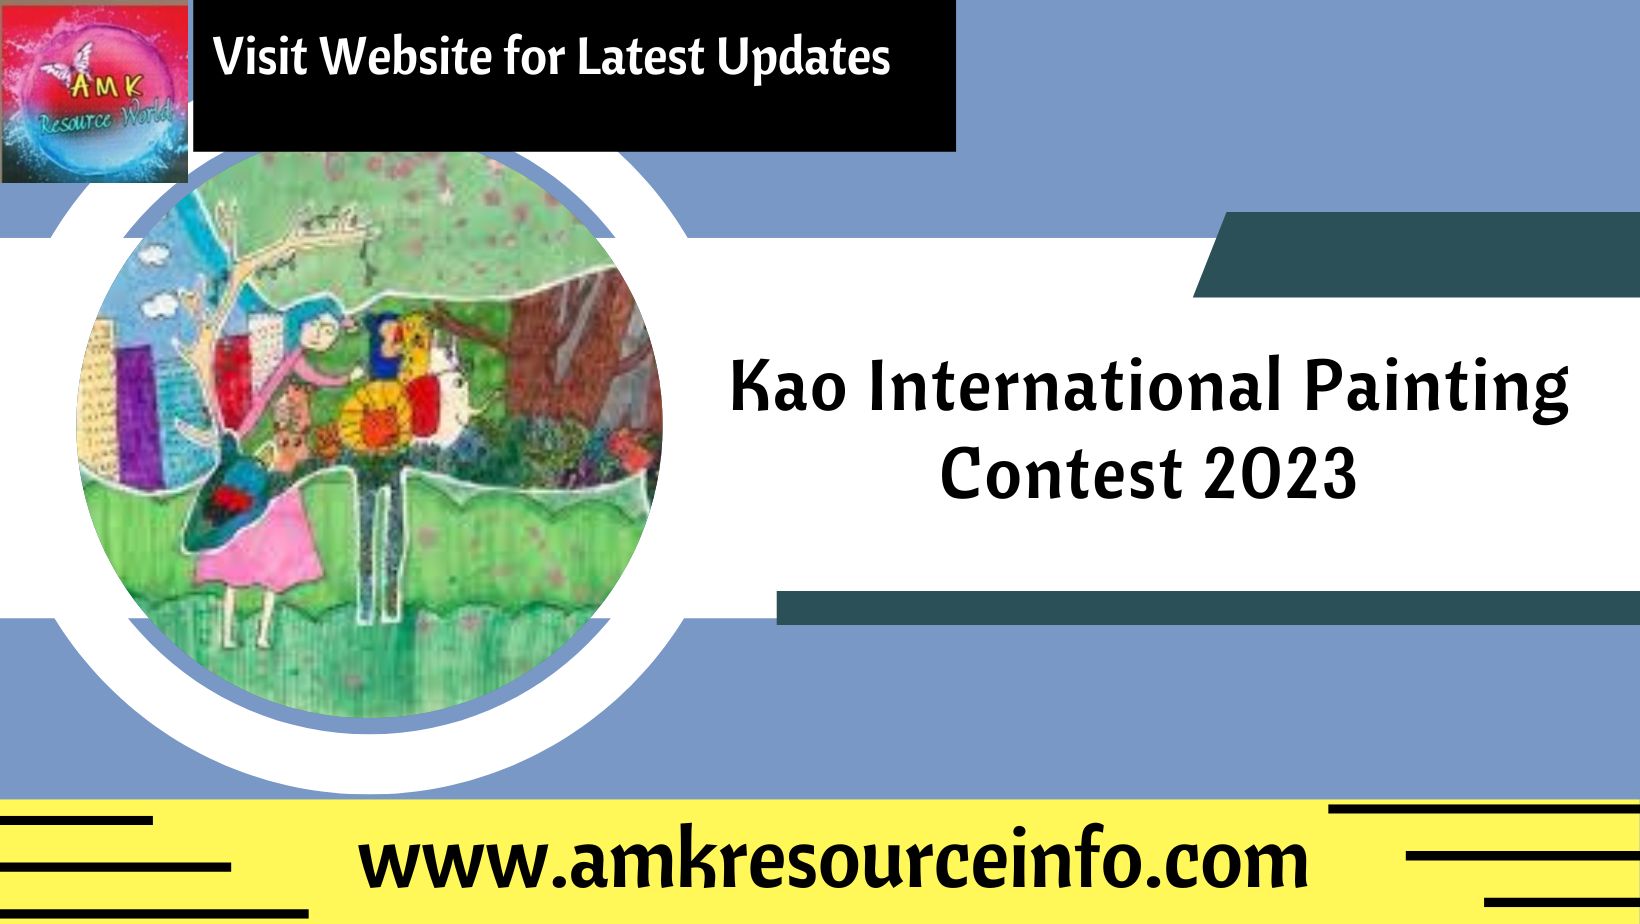 Kao International Painting Contest e